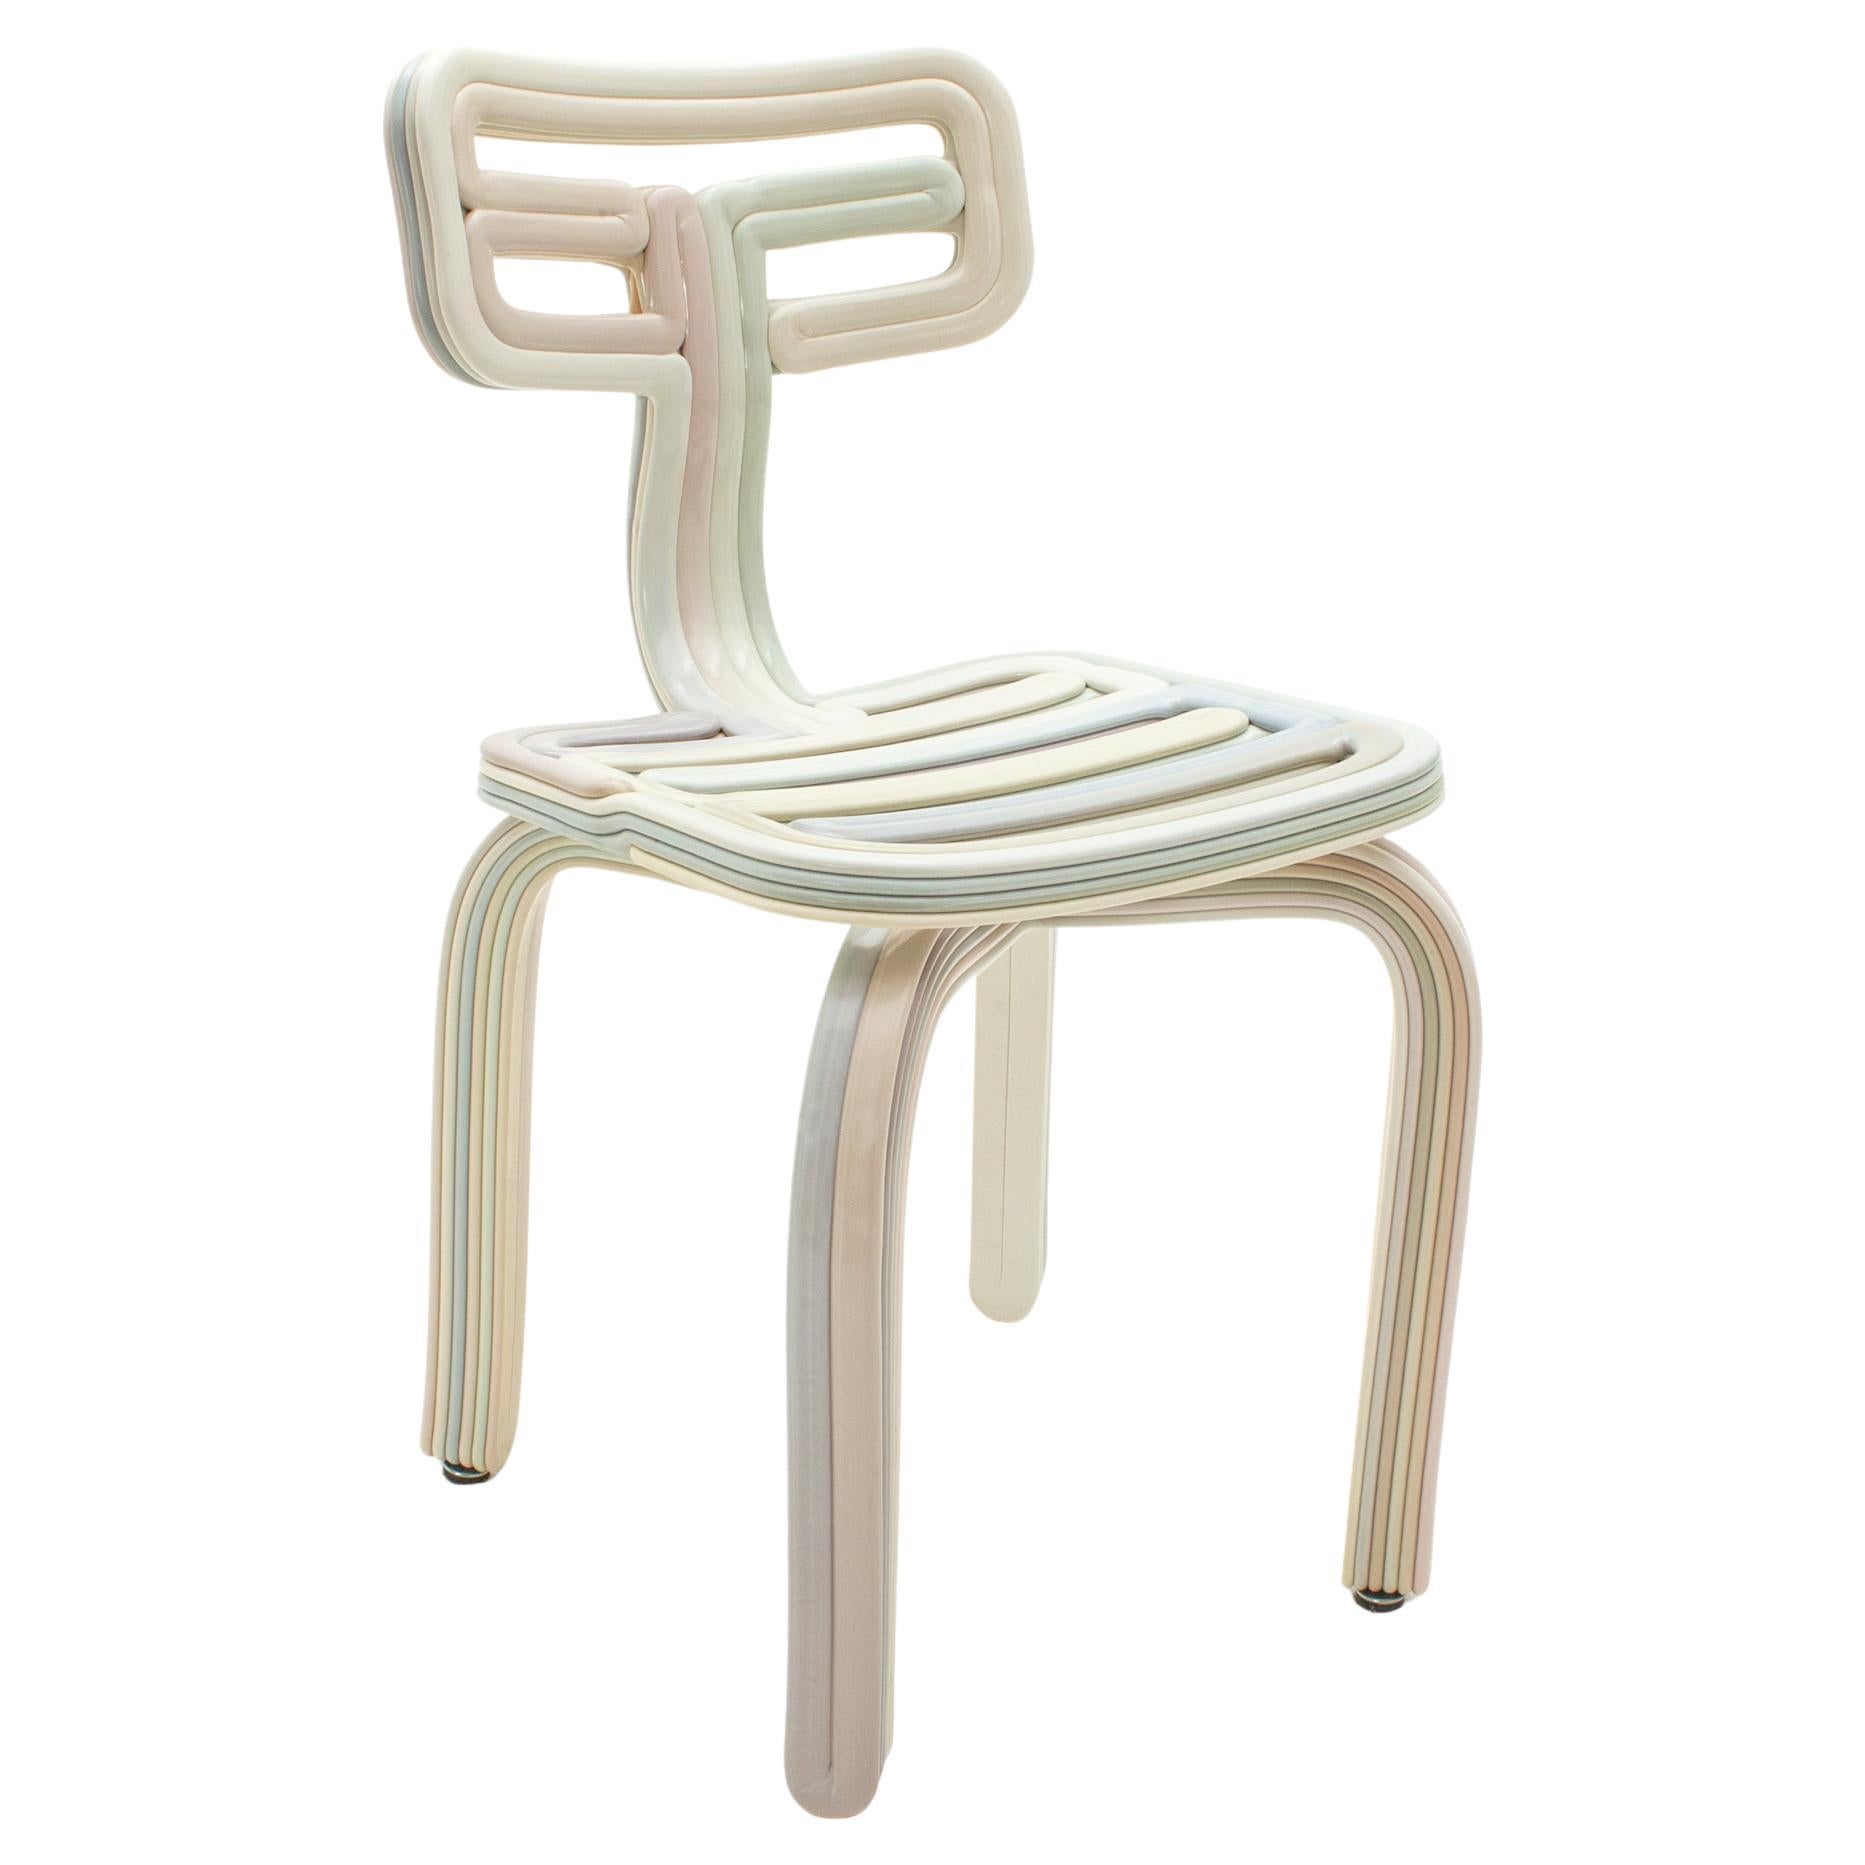 Chubby-Stuhl aus pastellfarbenem, 3D bedrucktem, recyceltem Kunststoff 